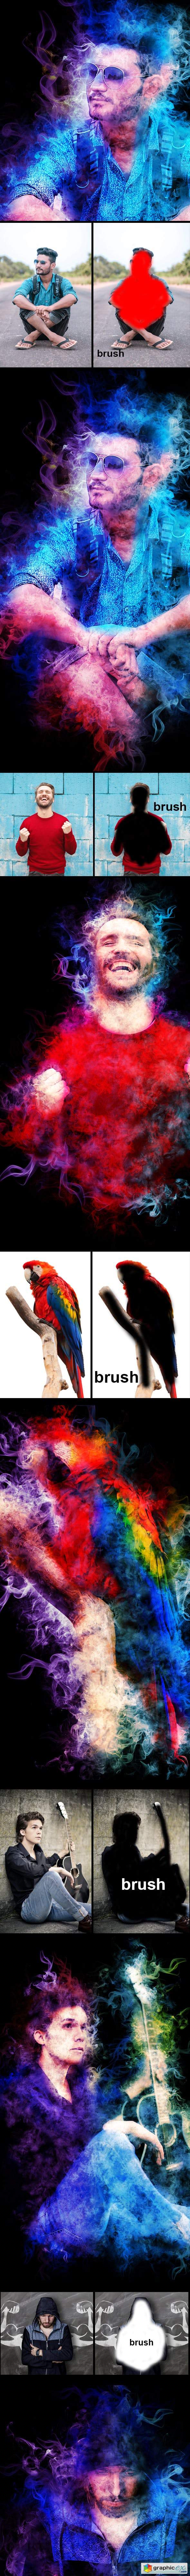 Amazing Colored Smoke Photoshop Action Vol 2